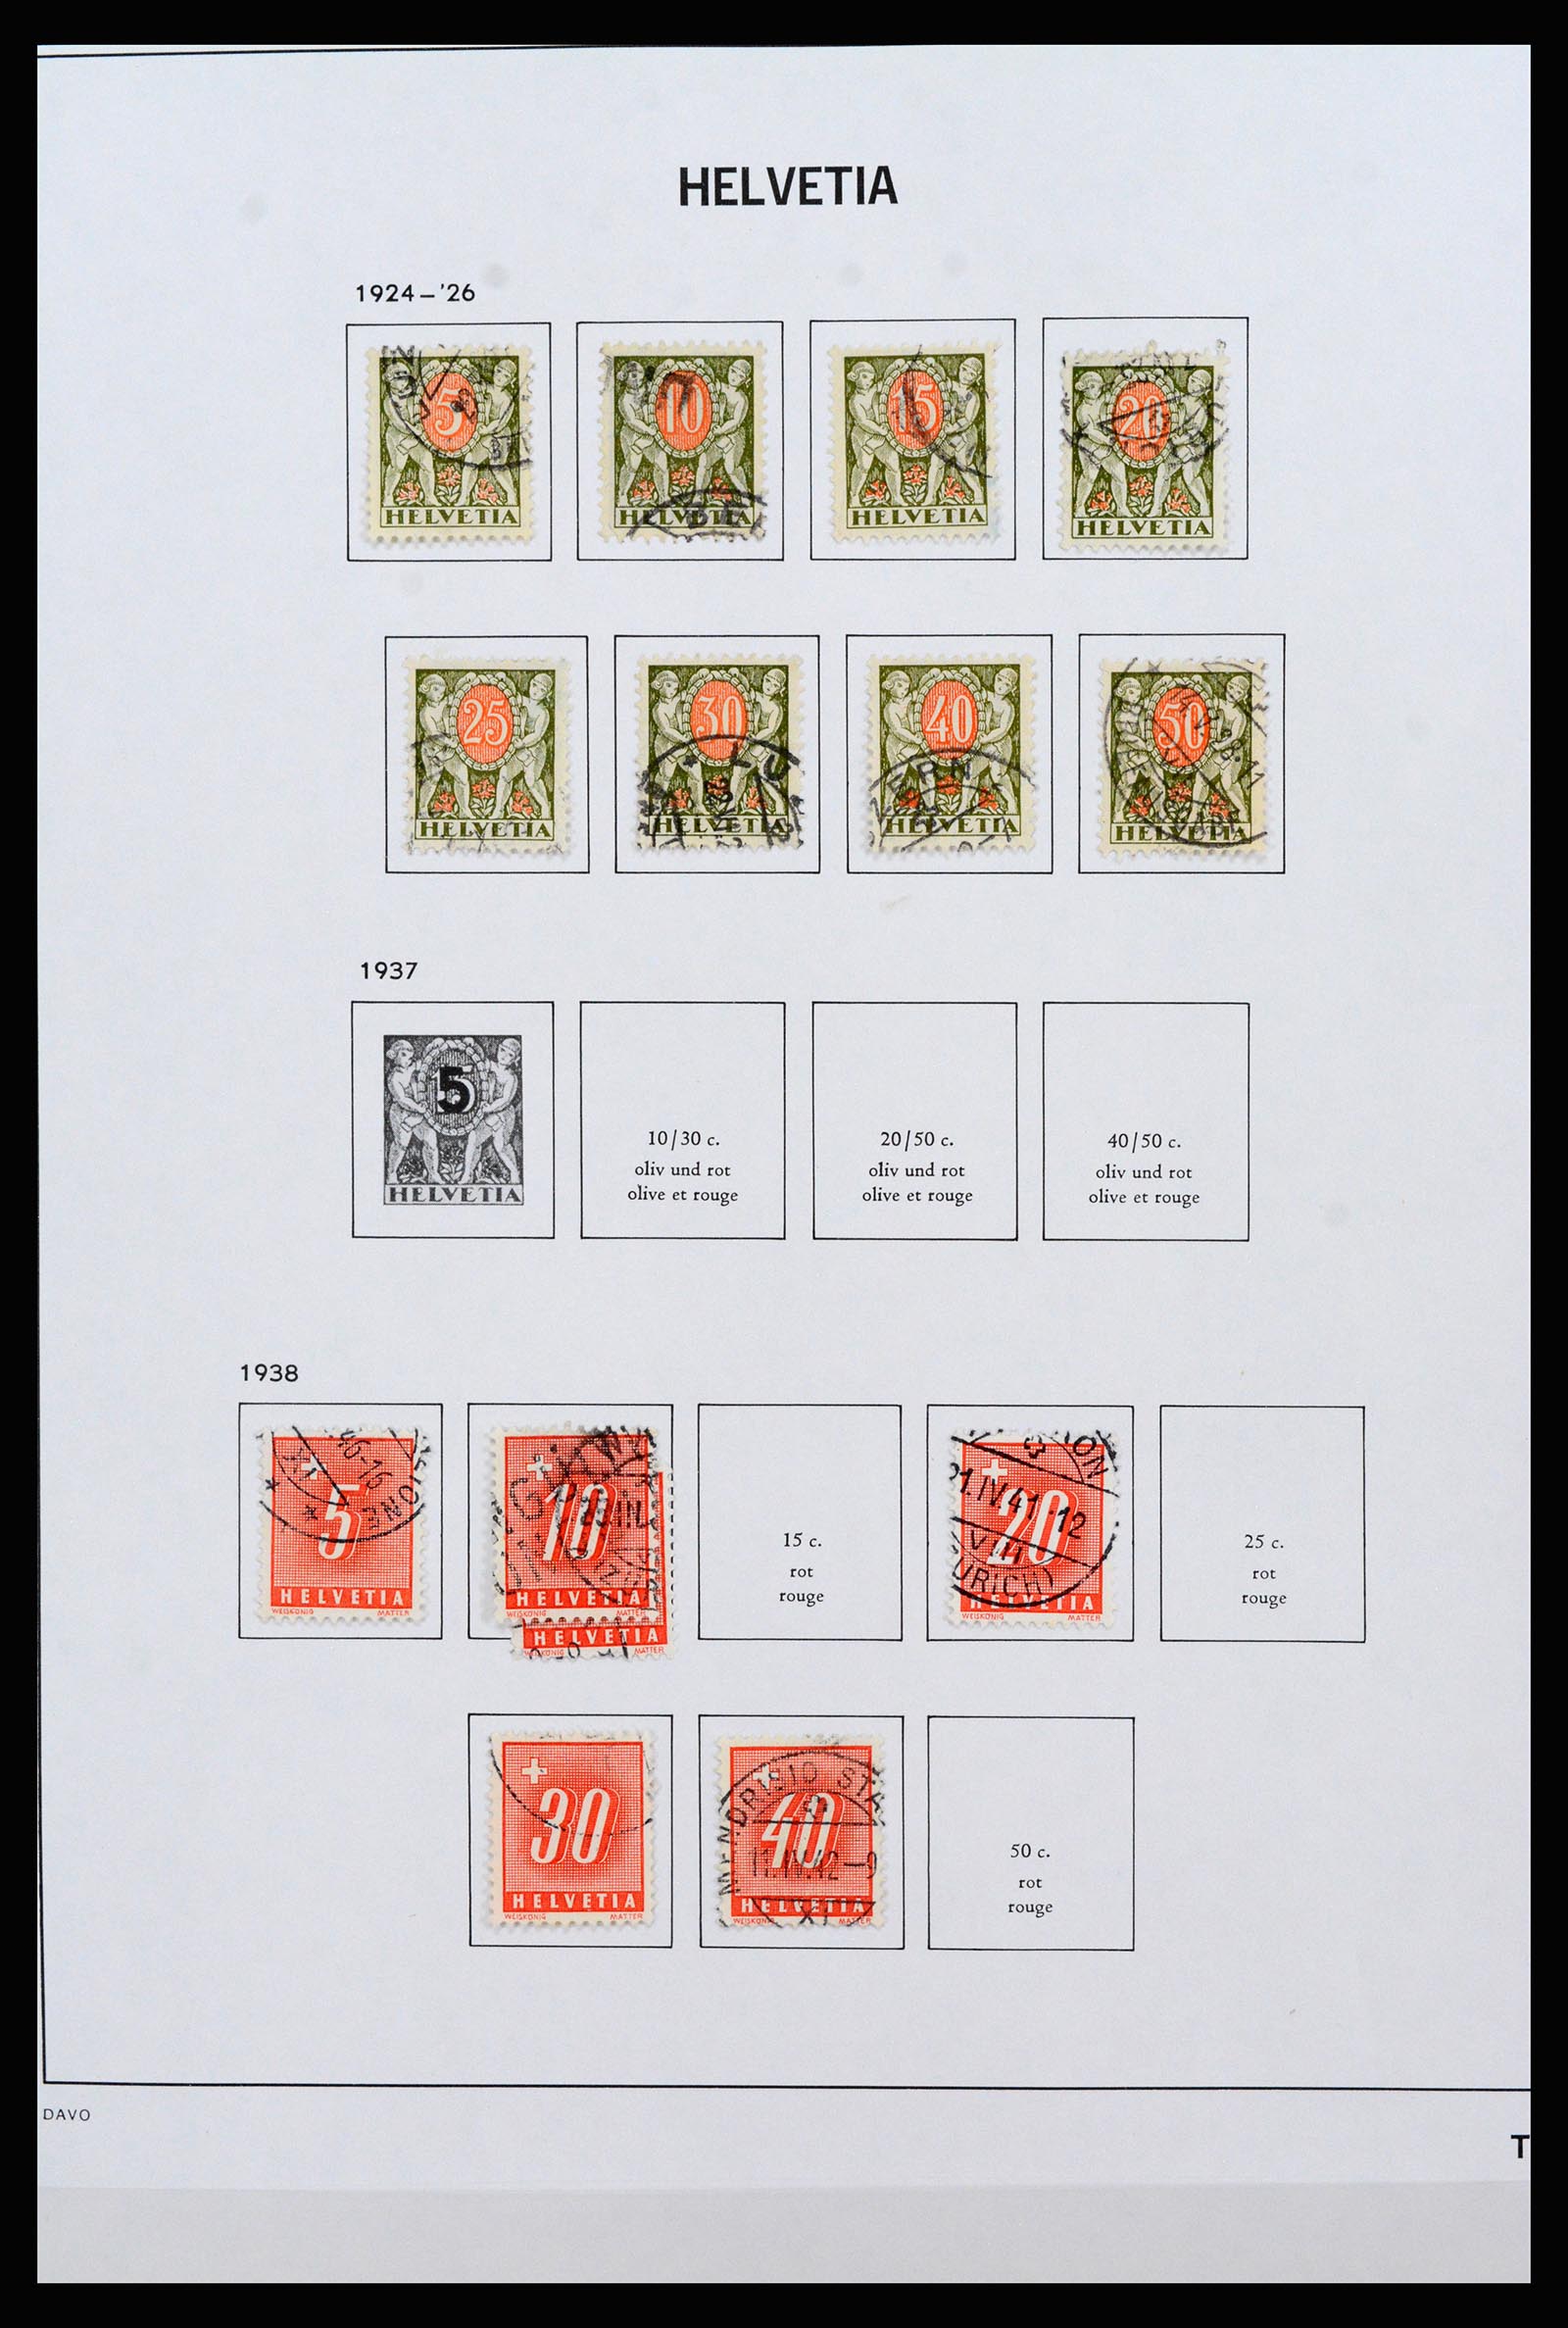 37225 206 - Stamp collection 37225 Switzerland 1854-2020.